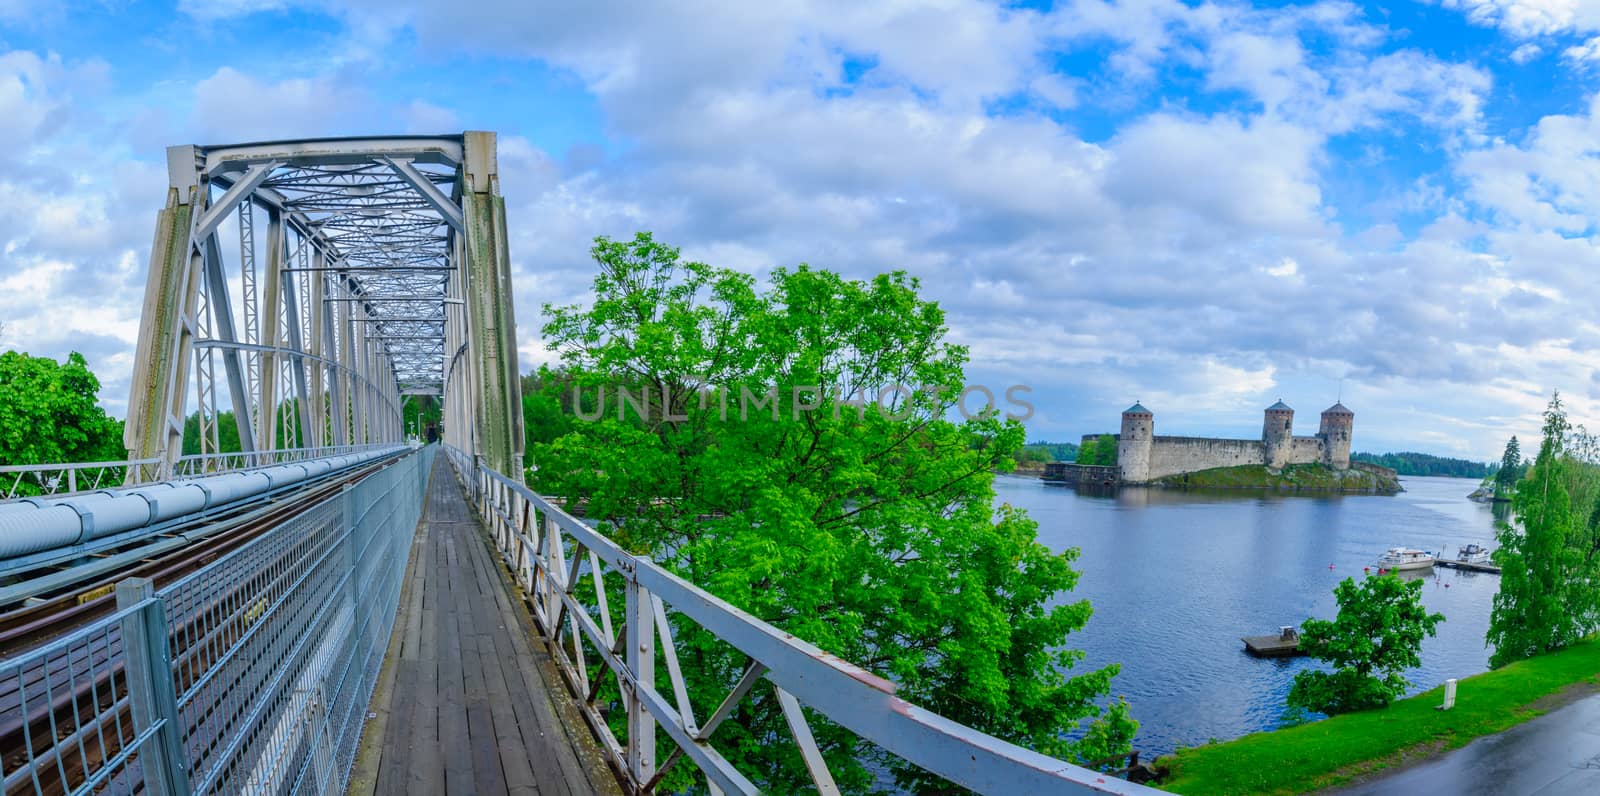 View of a train bridge and Olavinlinna castle in Savonlinna by RnDmS